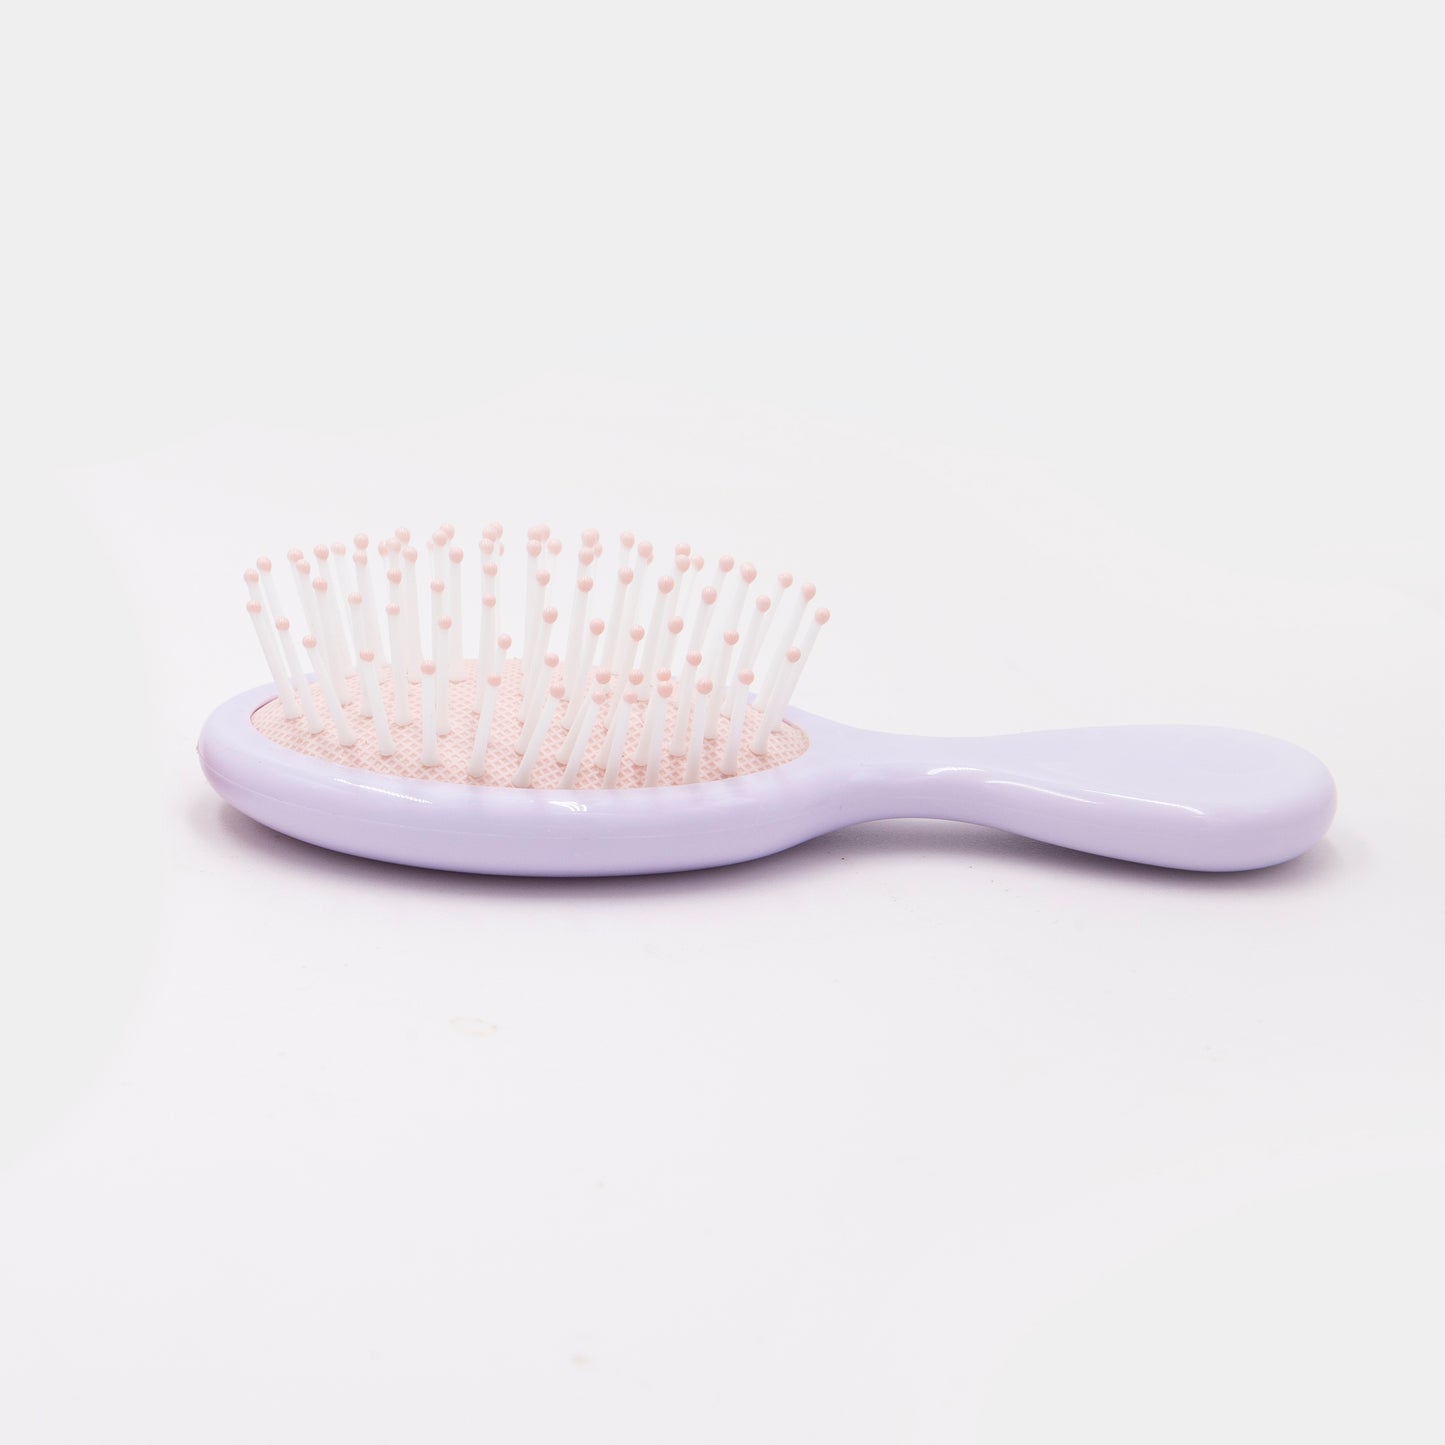 Cream Glue Project: Hair Comb/Brush